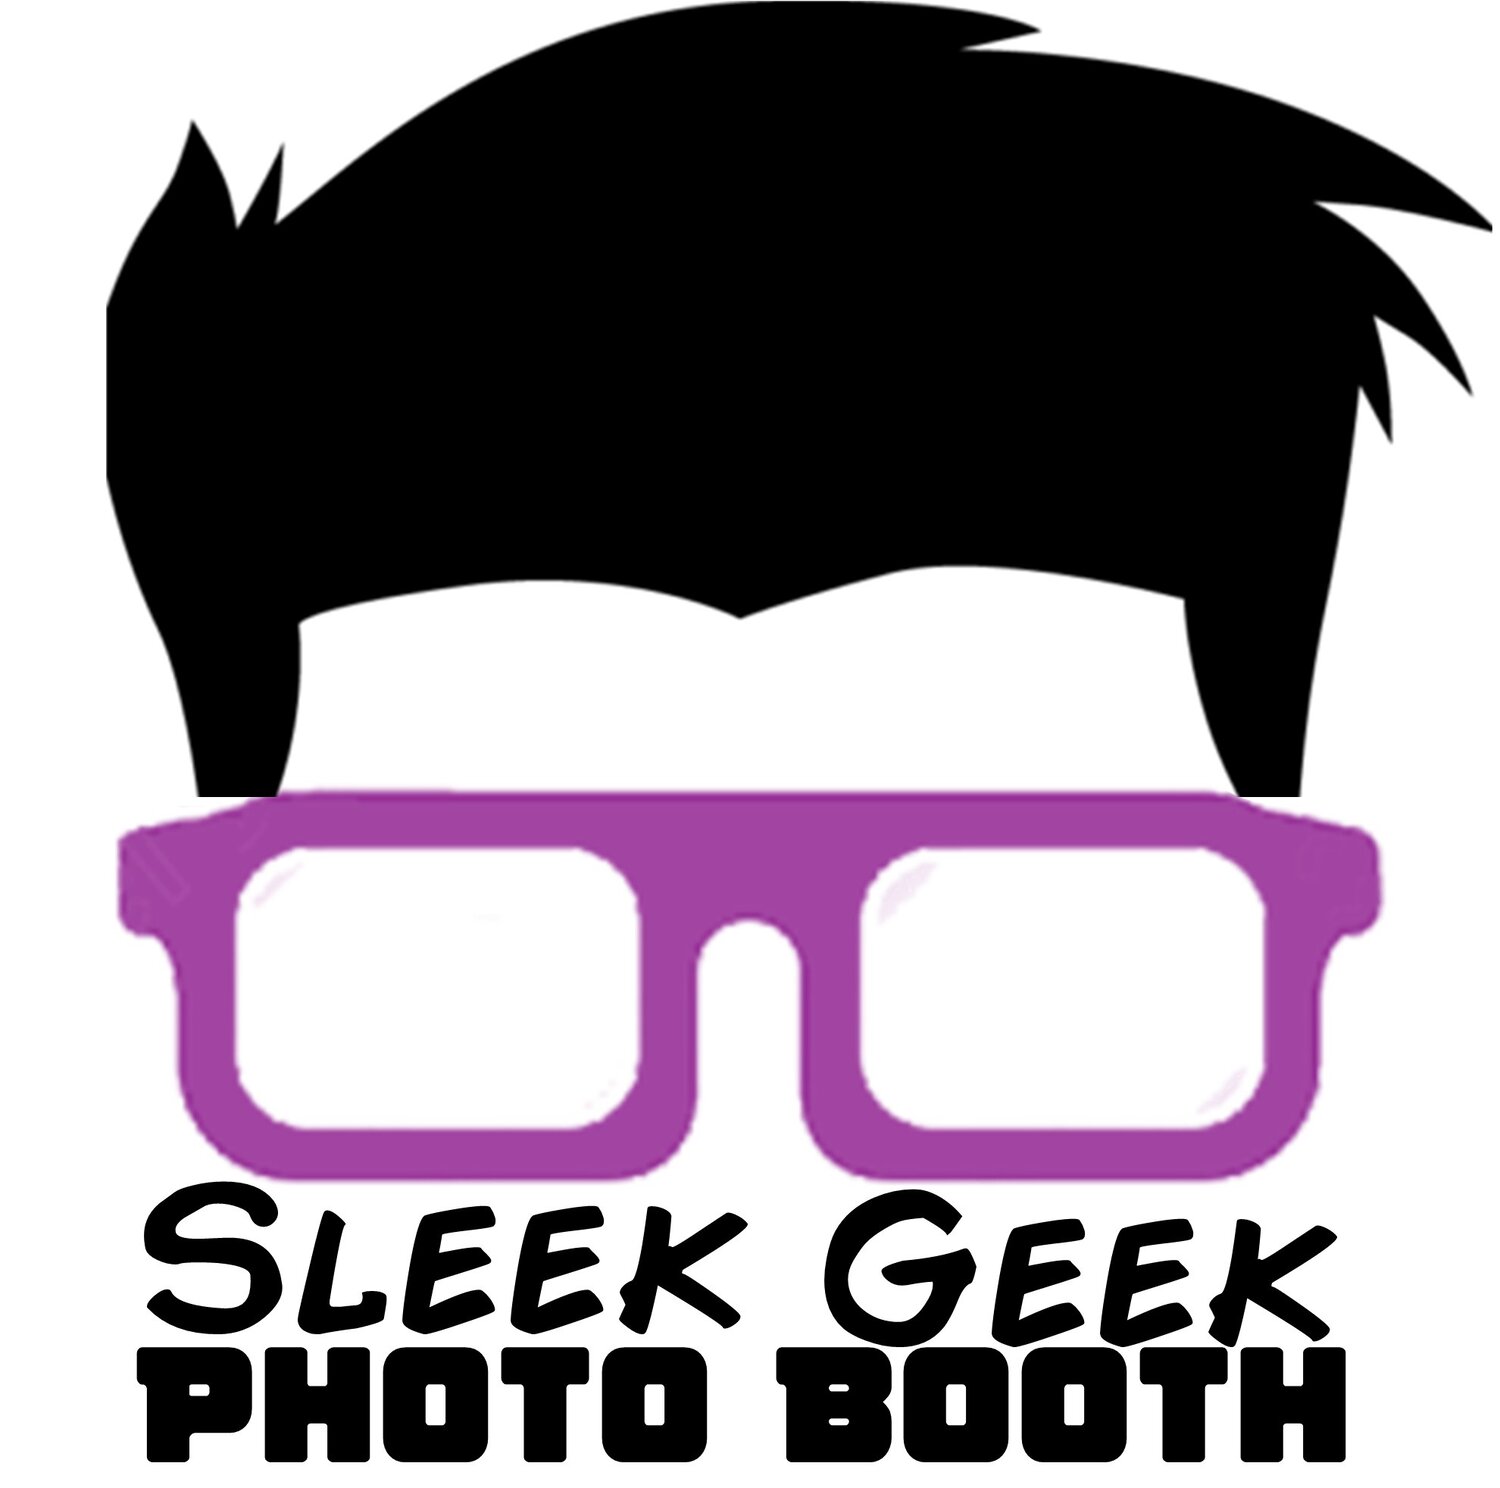 The Sleek Geek Photobooth